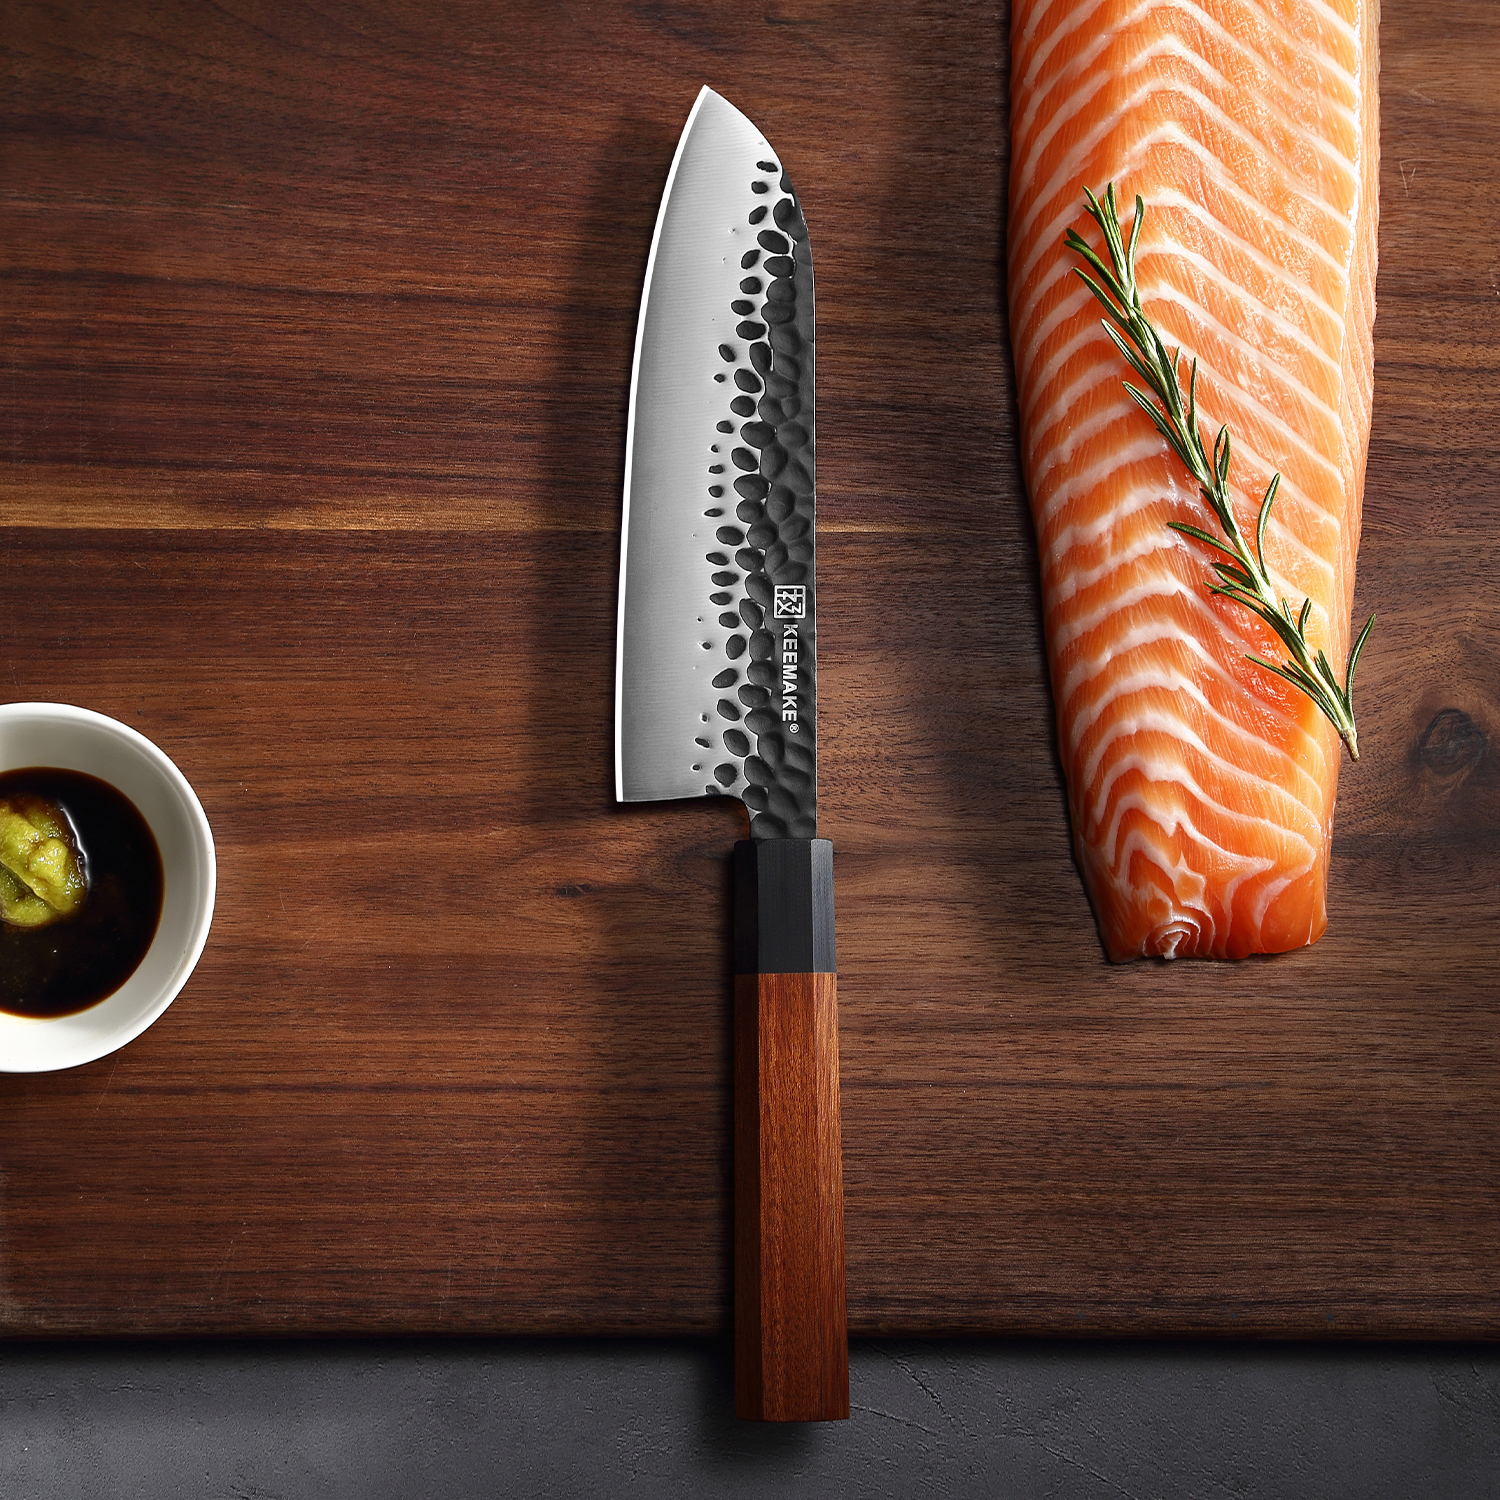 KEEMAKE Santoku Knife 7 inch Chef Knife